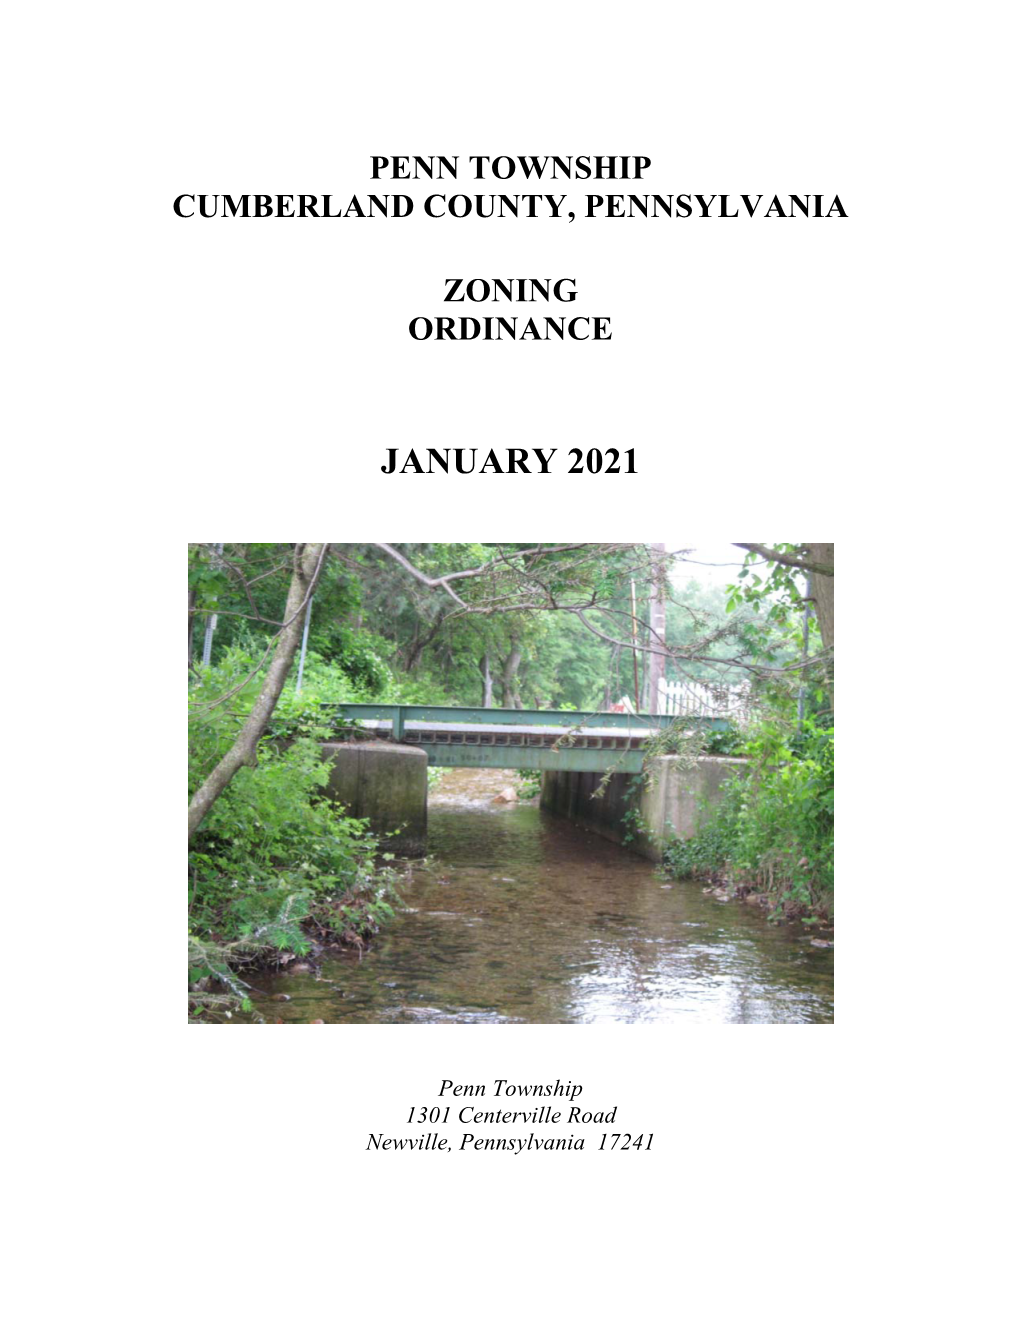 Ordinance 2021-05 Penn Township Zoning Ordinance